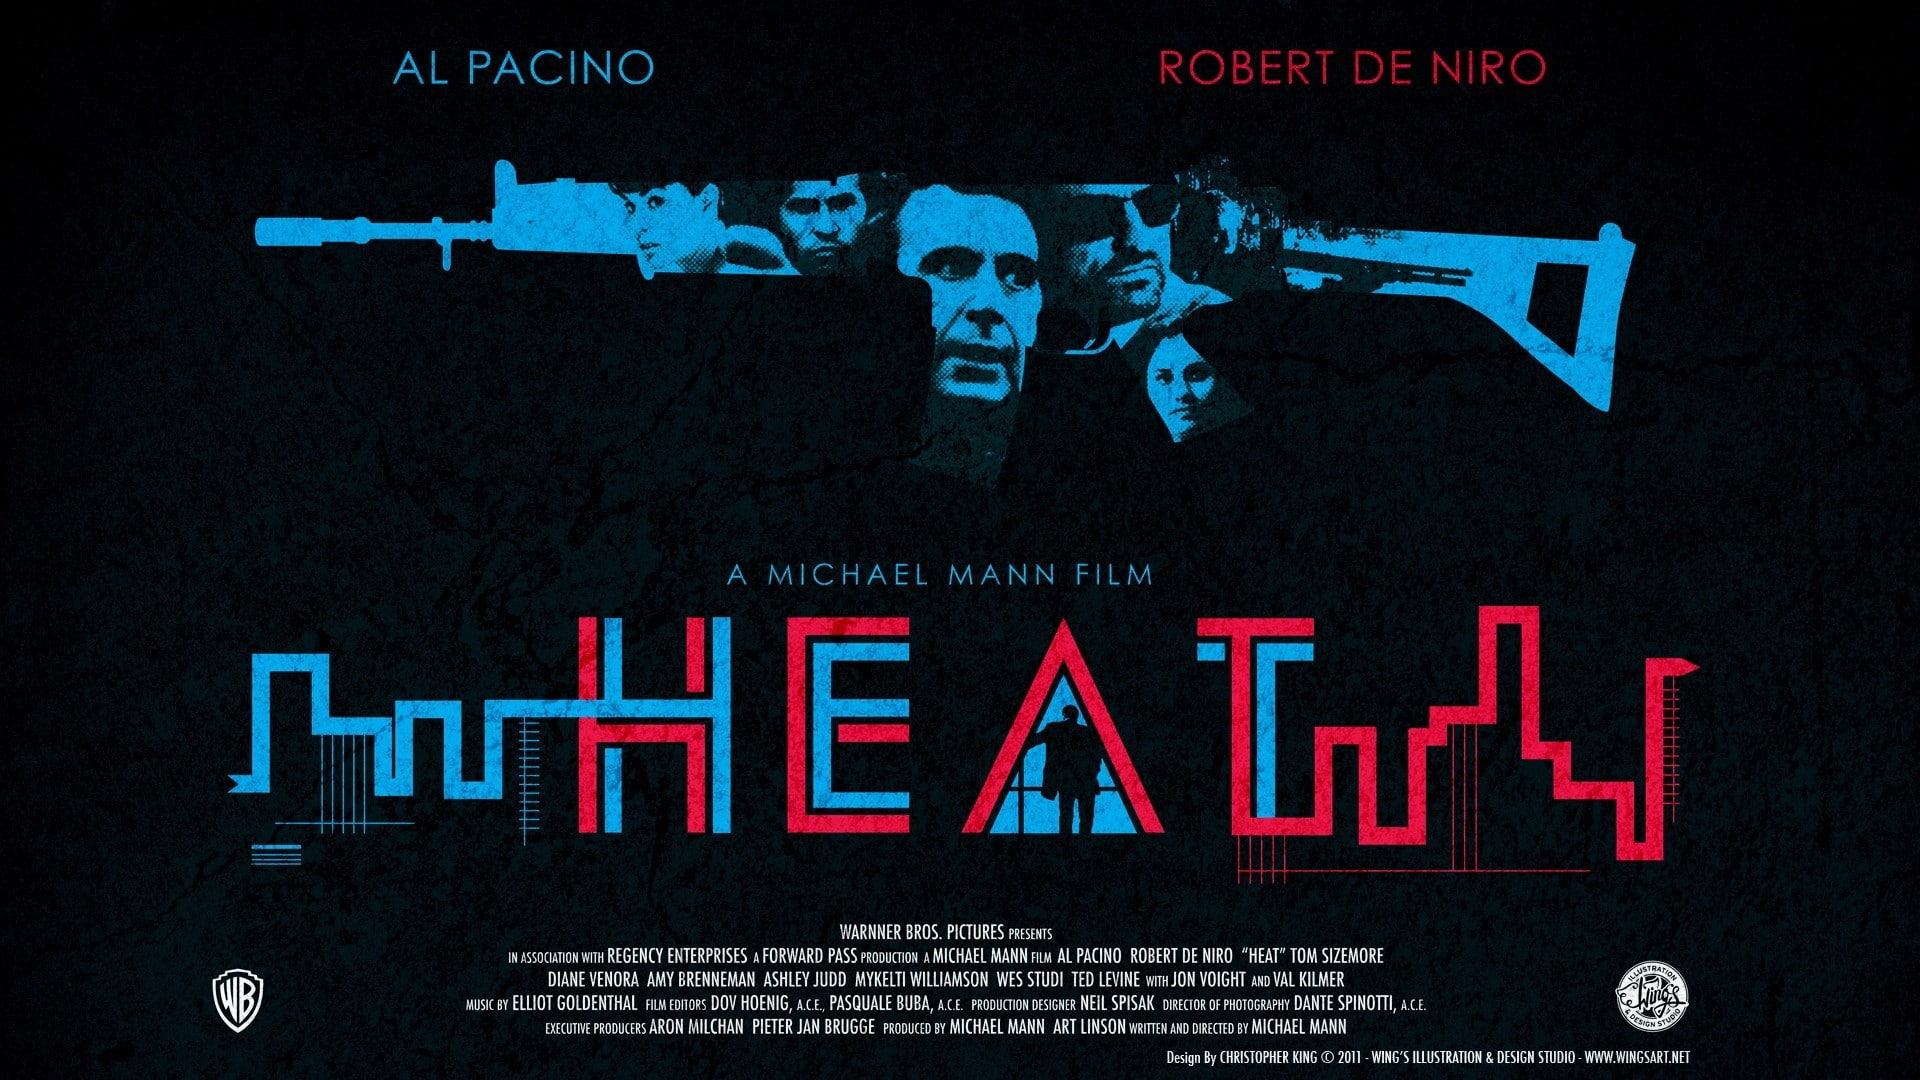 al pacino robert de niro heat heat movie heat movie, communication